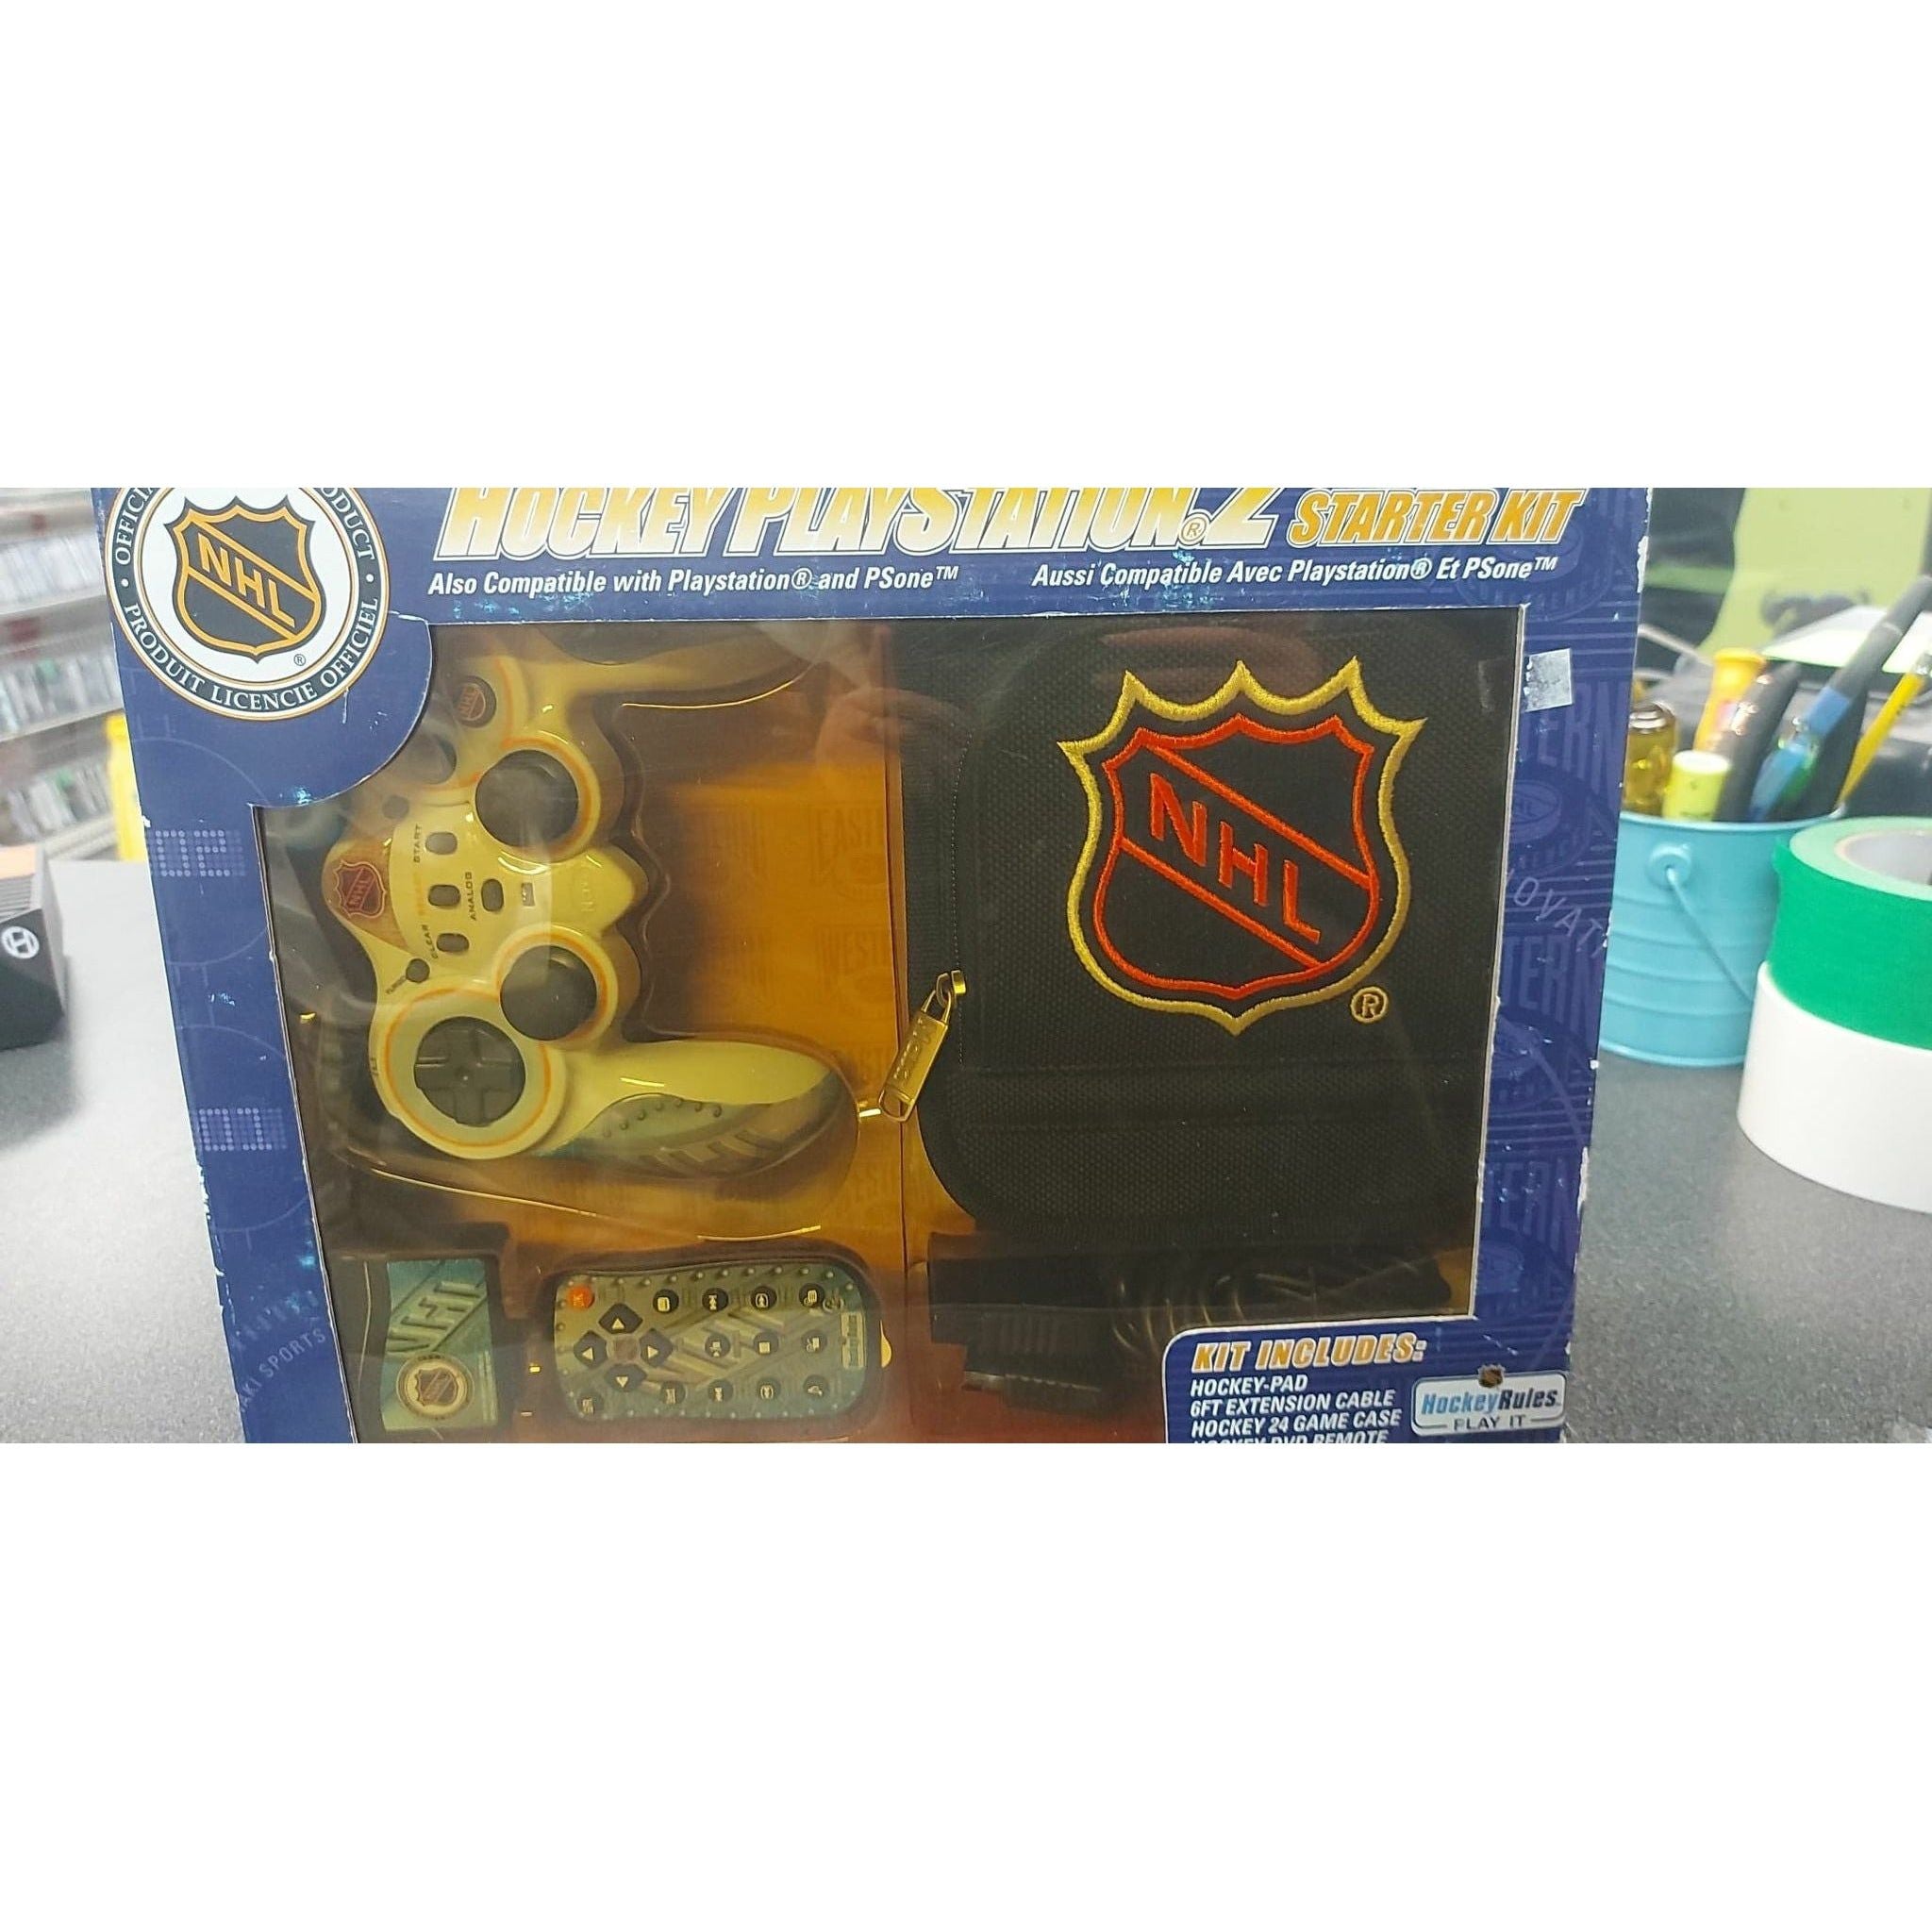 PS2 - Naki NHL Starter Kit